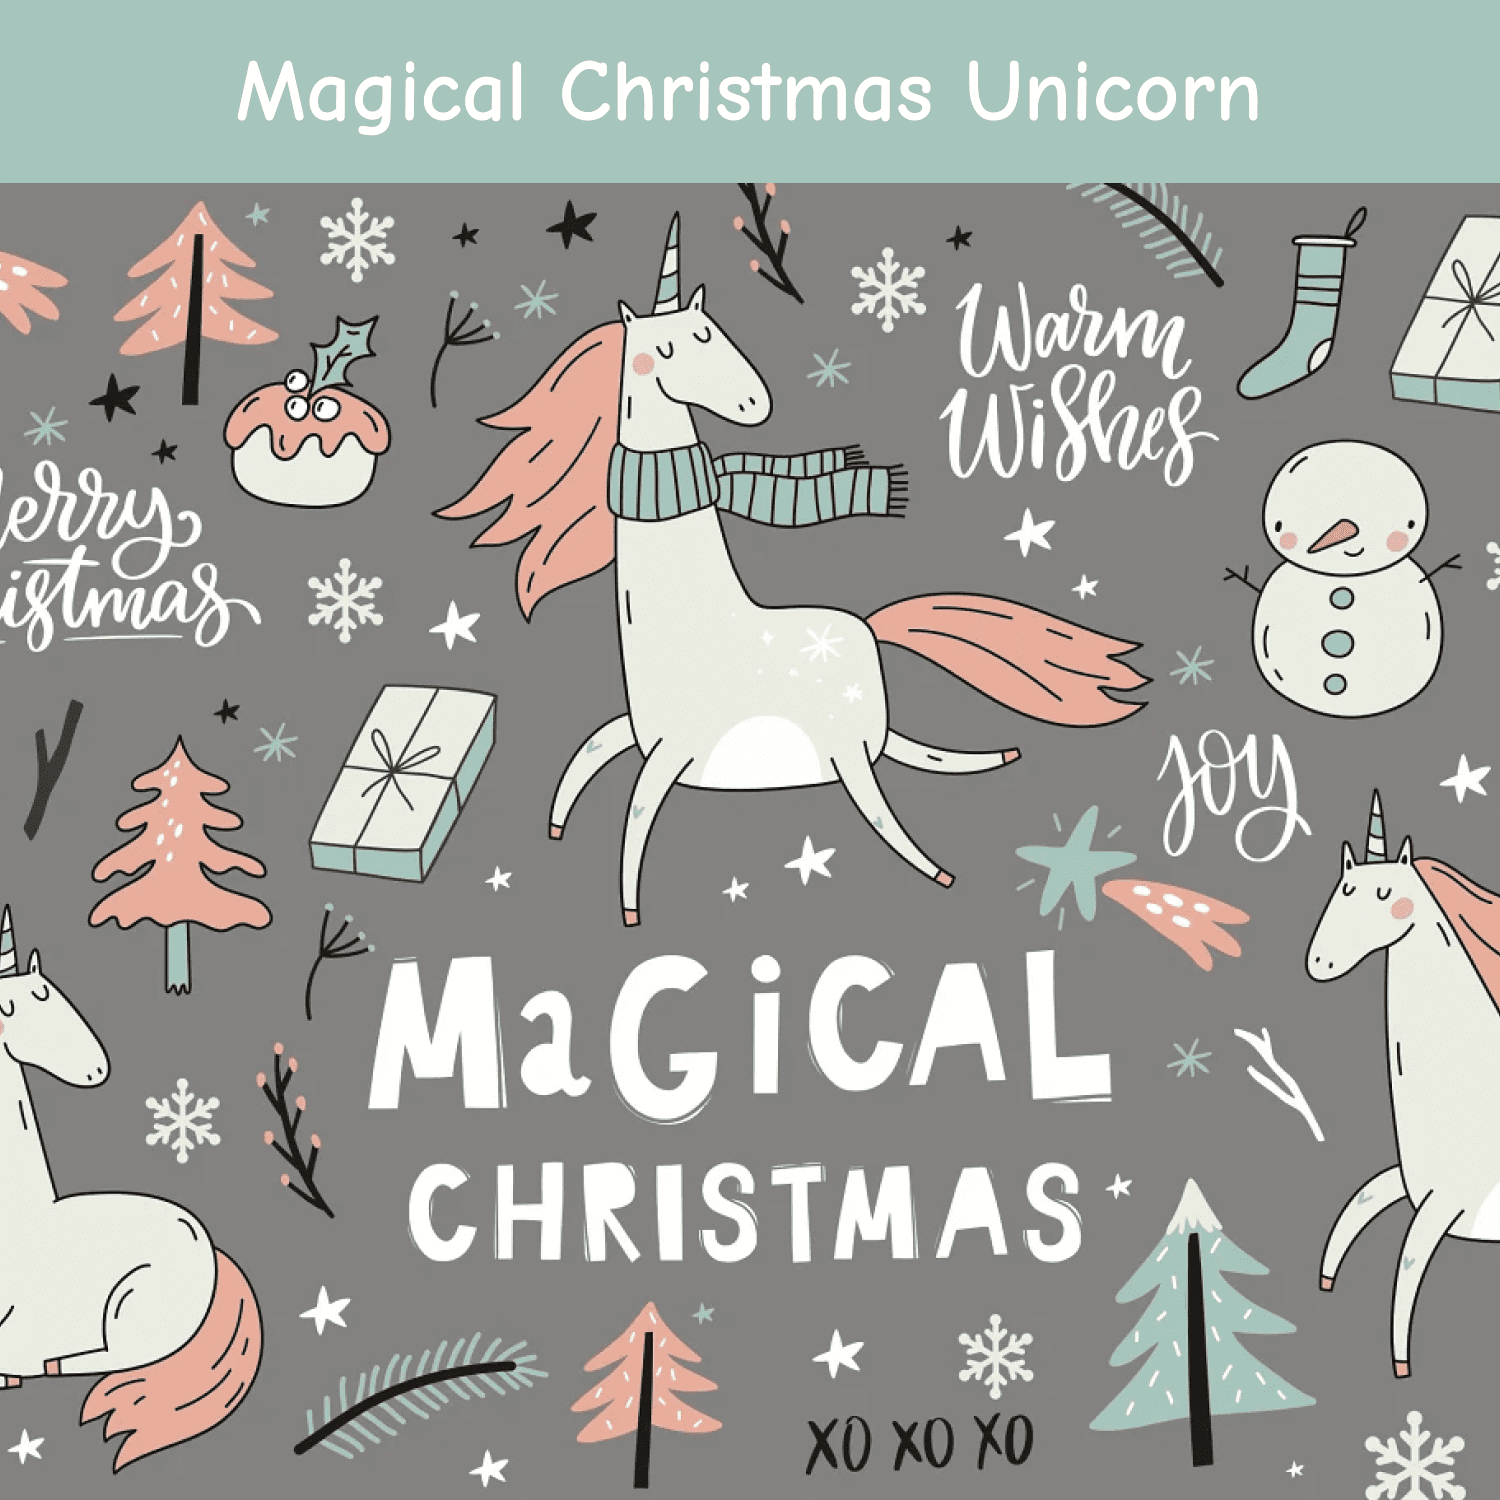 Magical Christmas Unicorn cover.